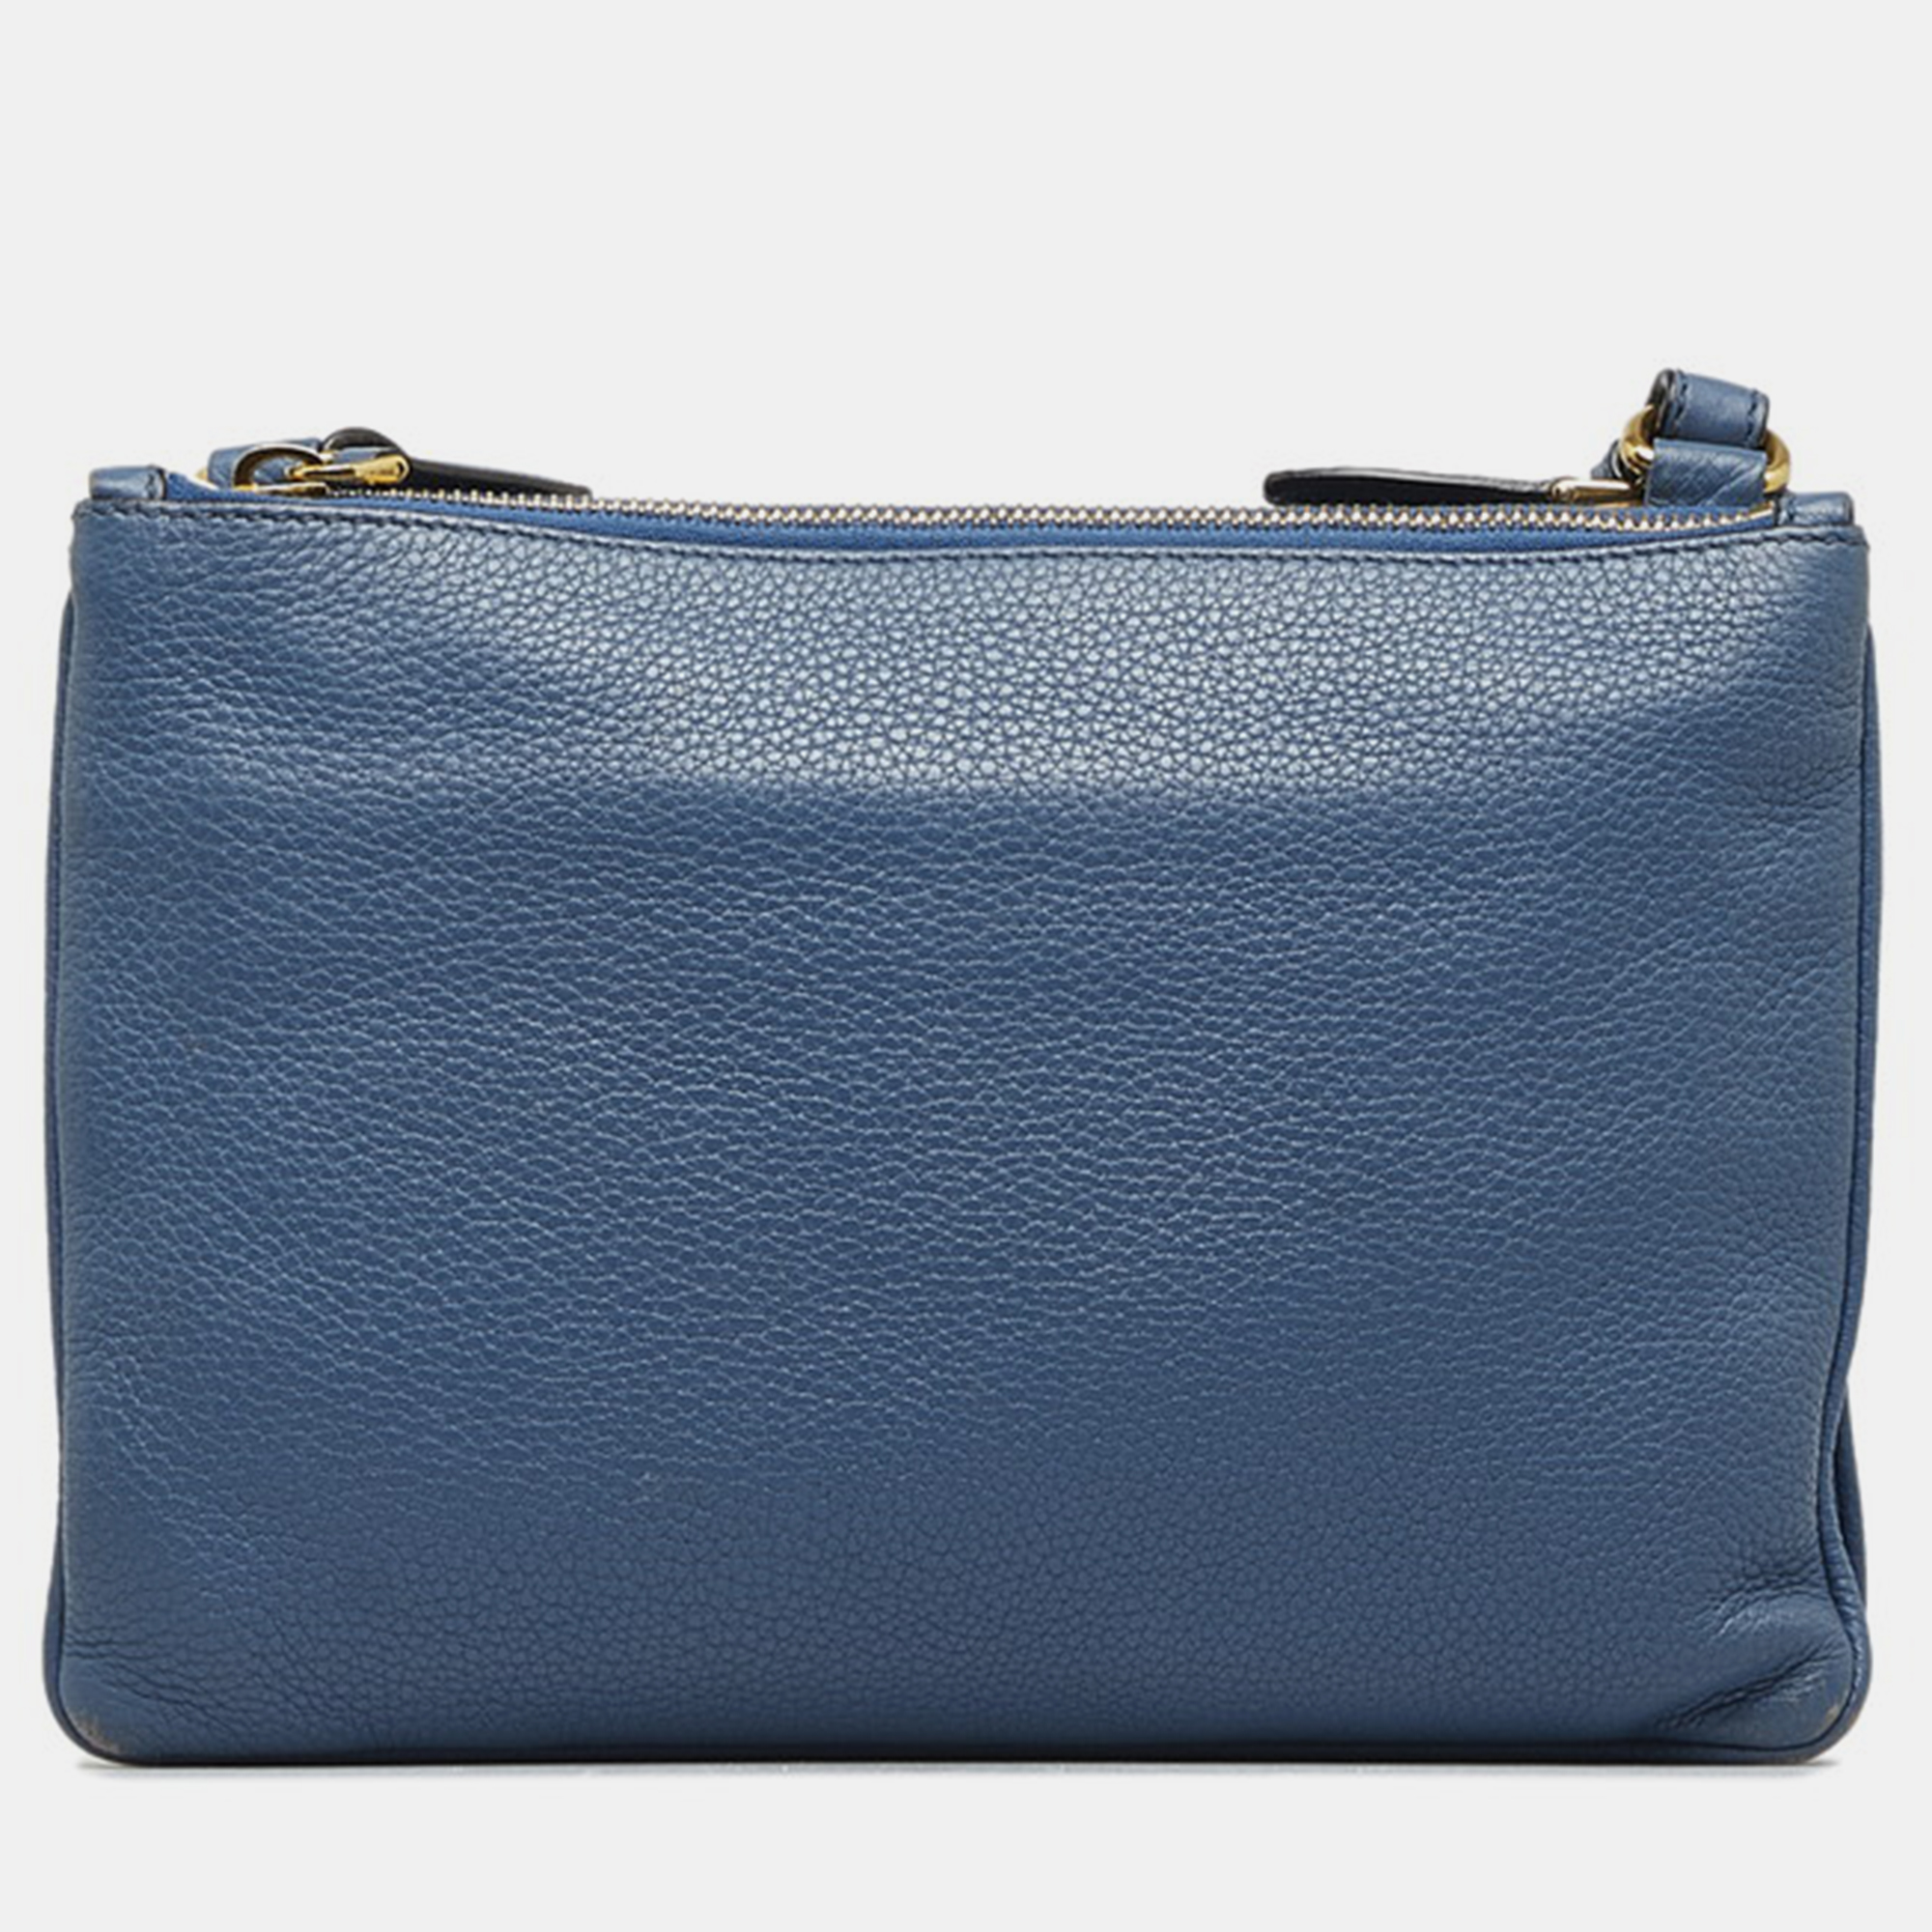 Prada Blue Leather Leather Crossbody Bag